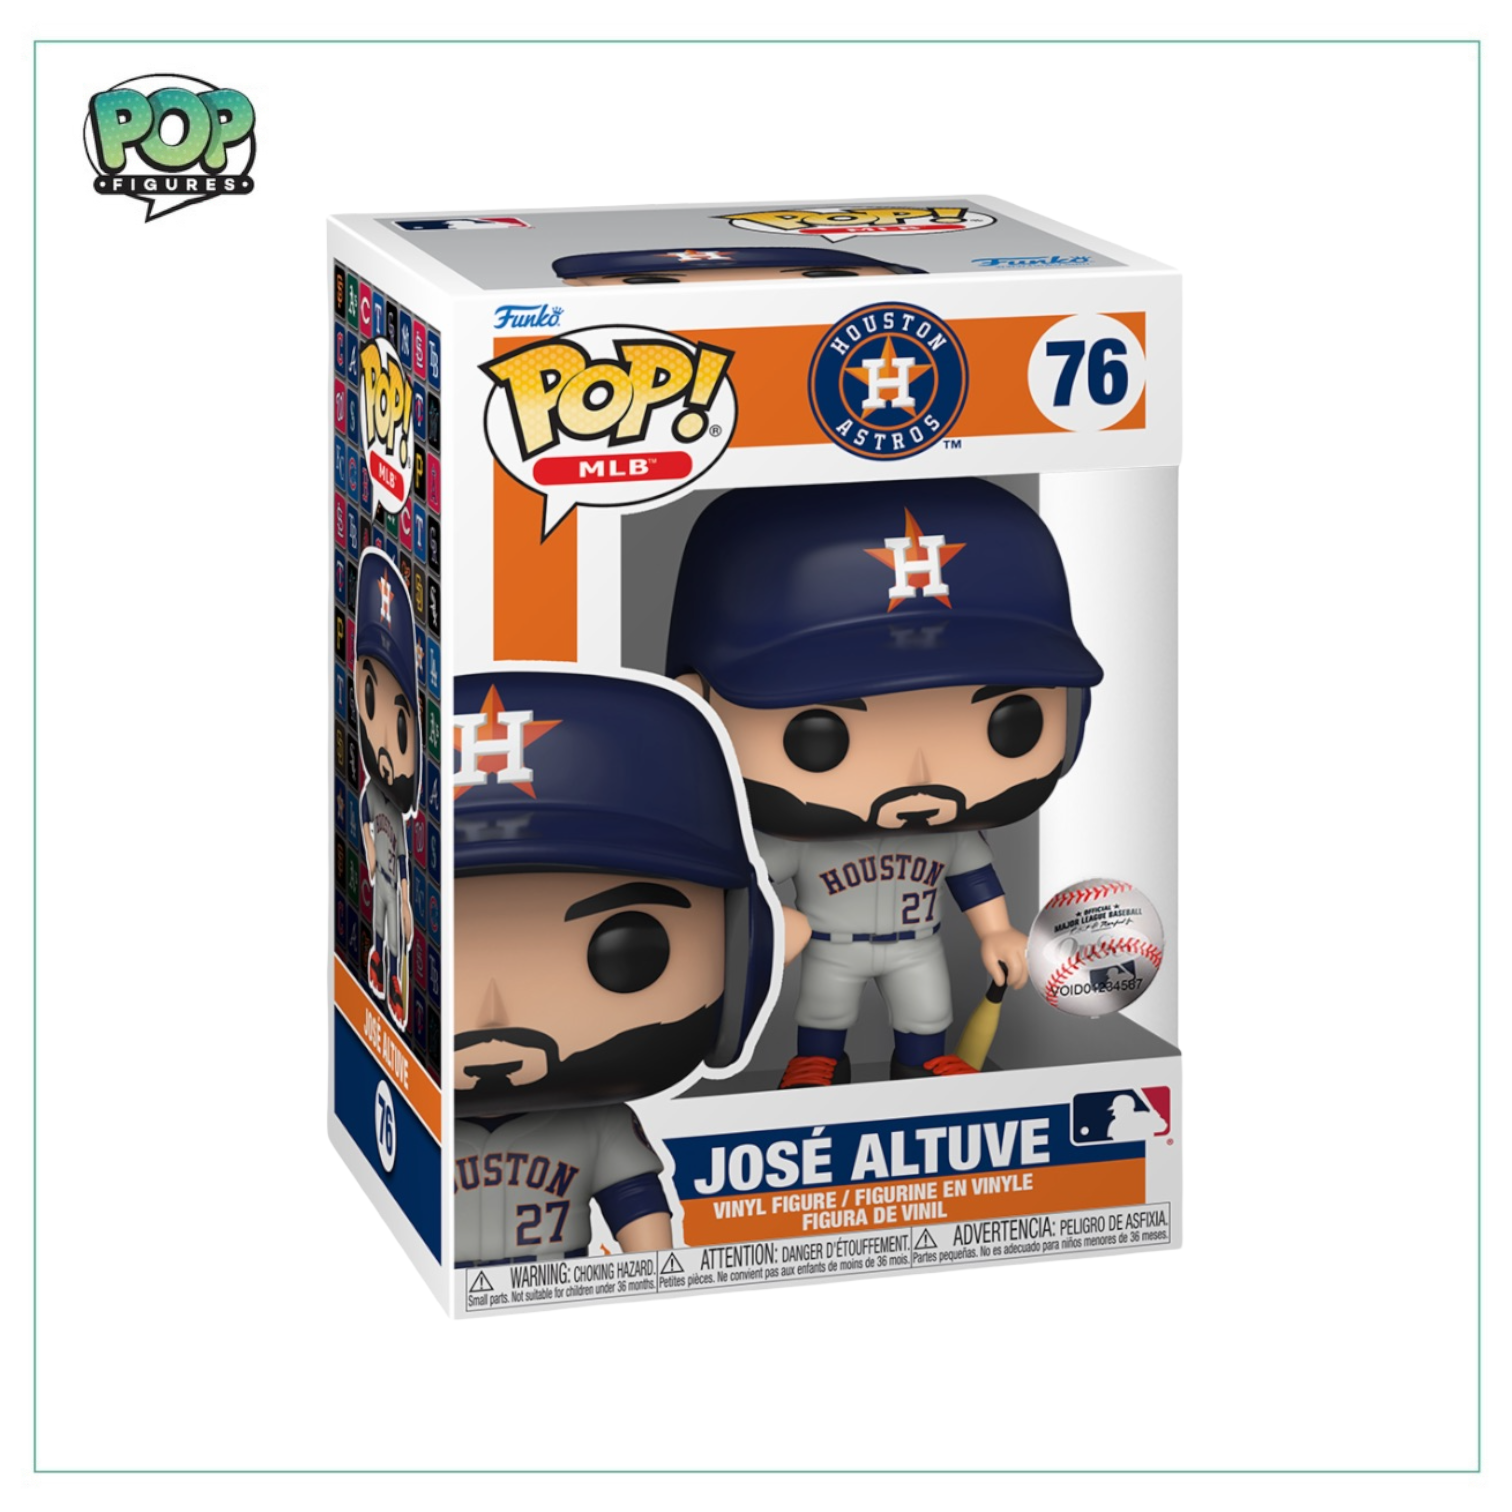 José Altuve #76 Funko Pop! - MLB